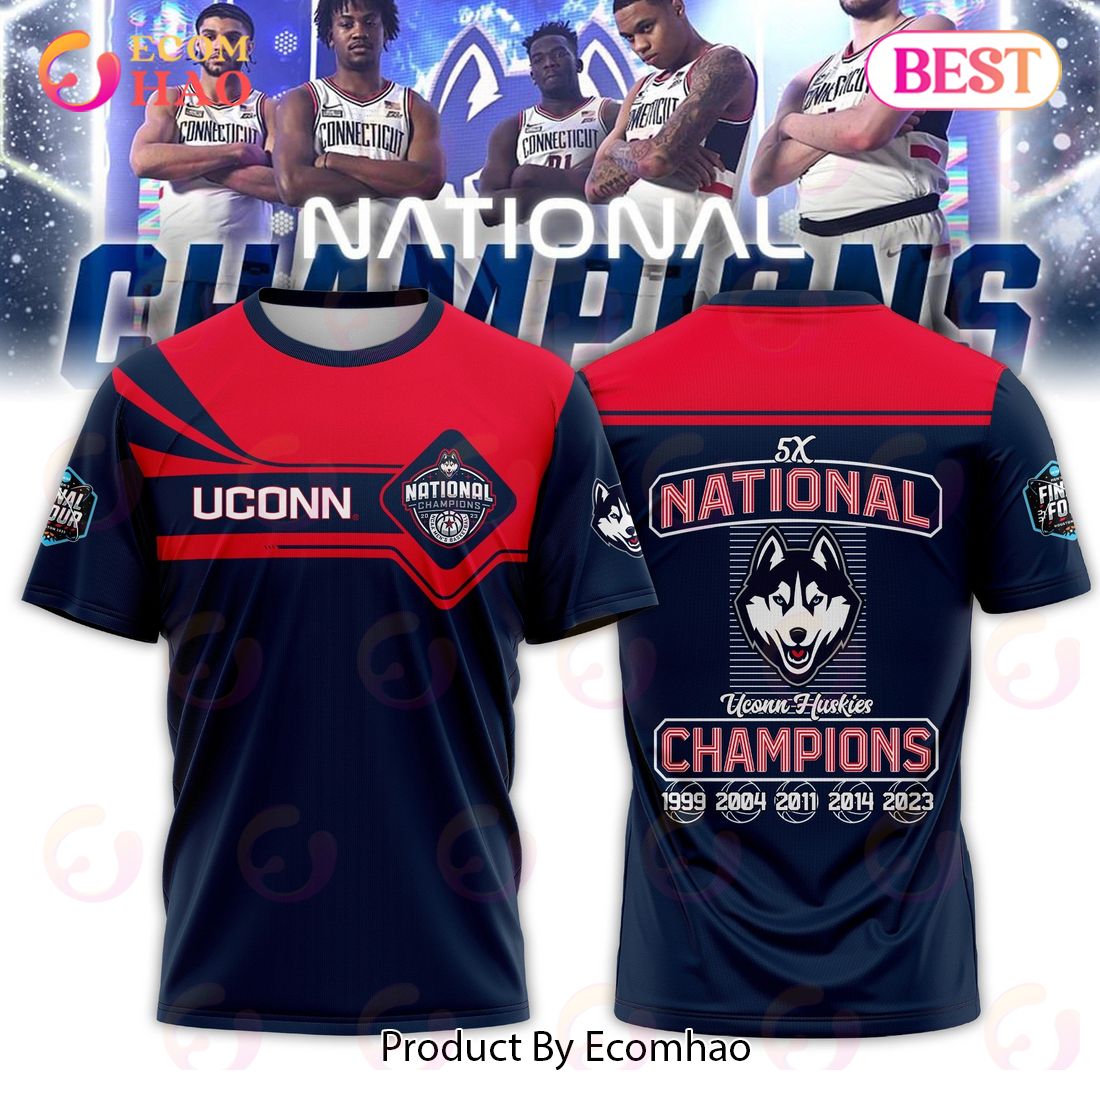 Uconn Huskies Ncaa Mens Basketball National Champions 2023 Shirt